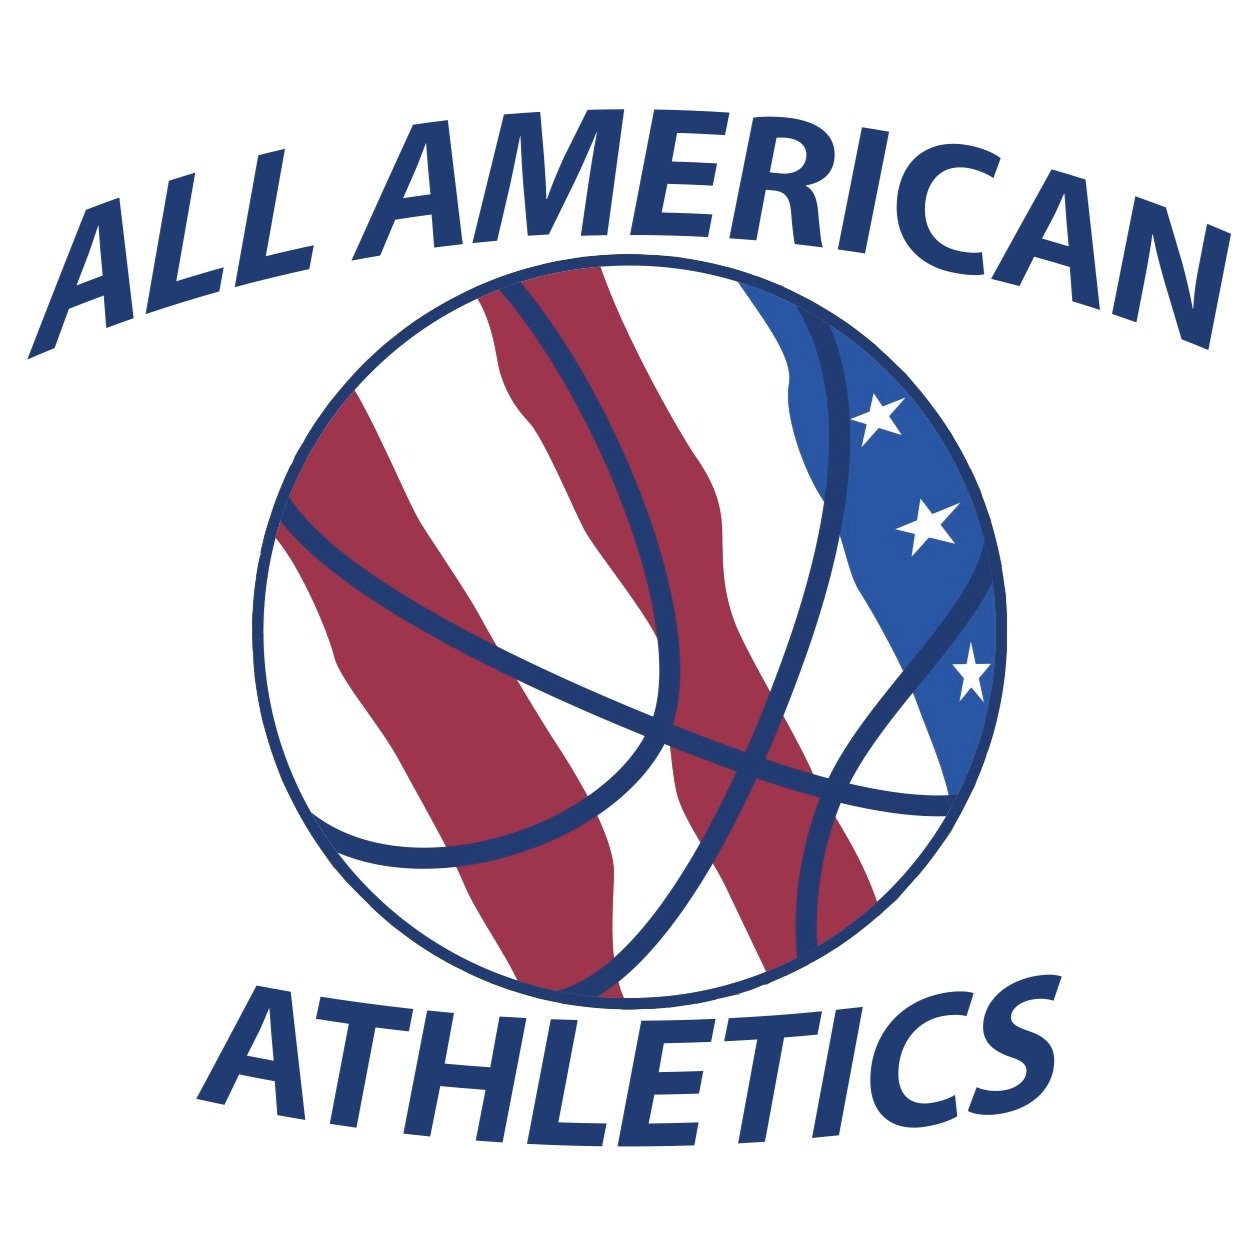 All American Athletics